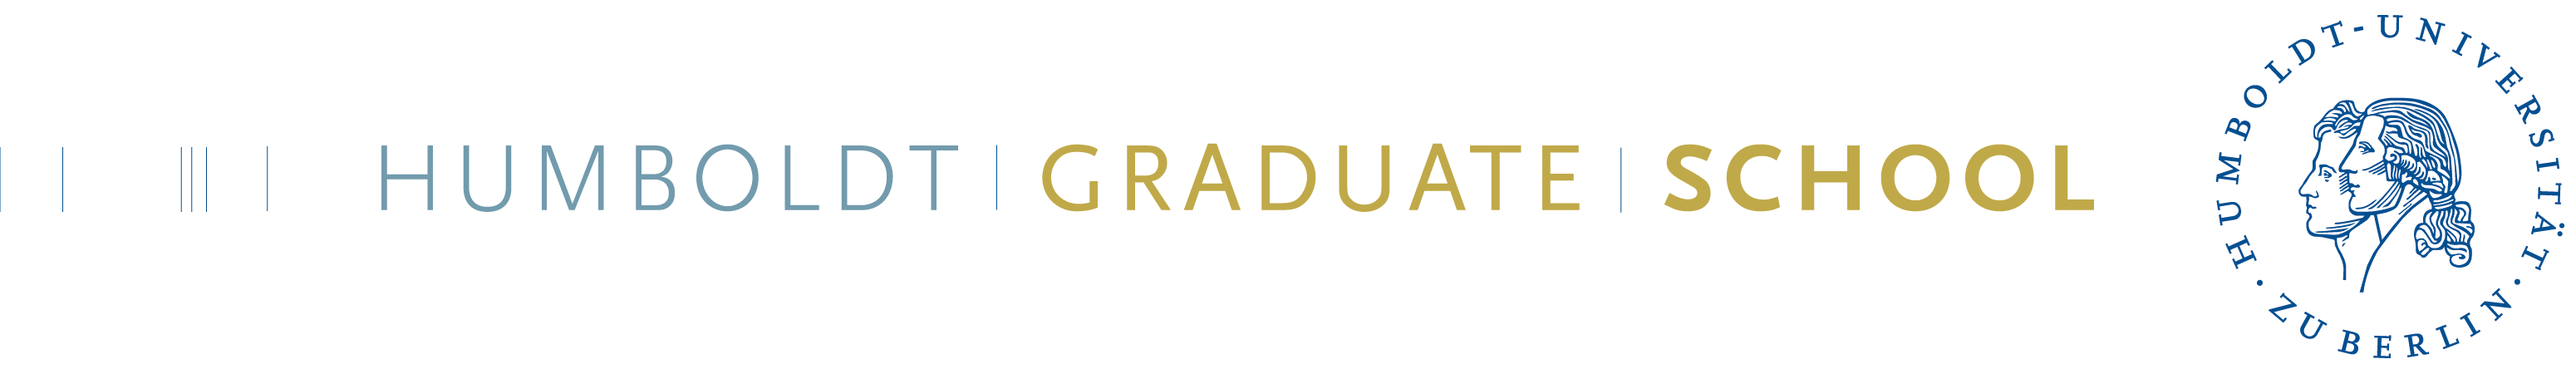 hu graduate school logo